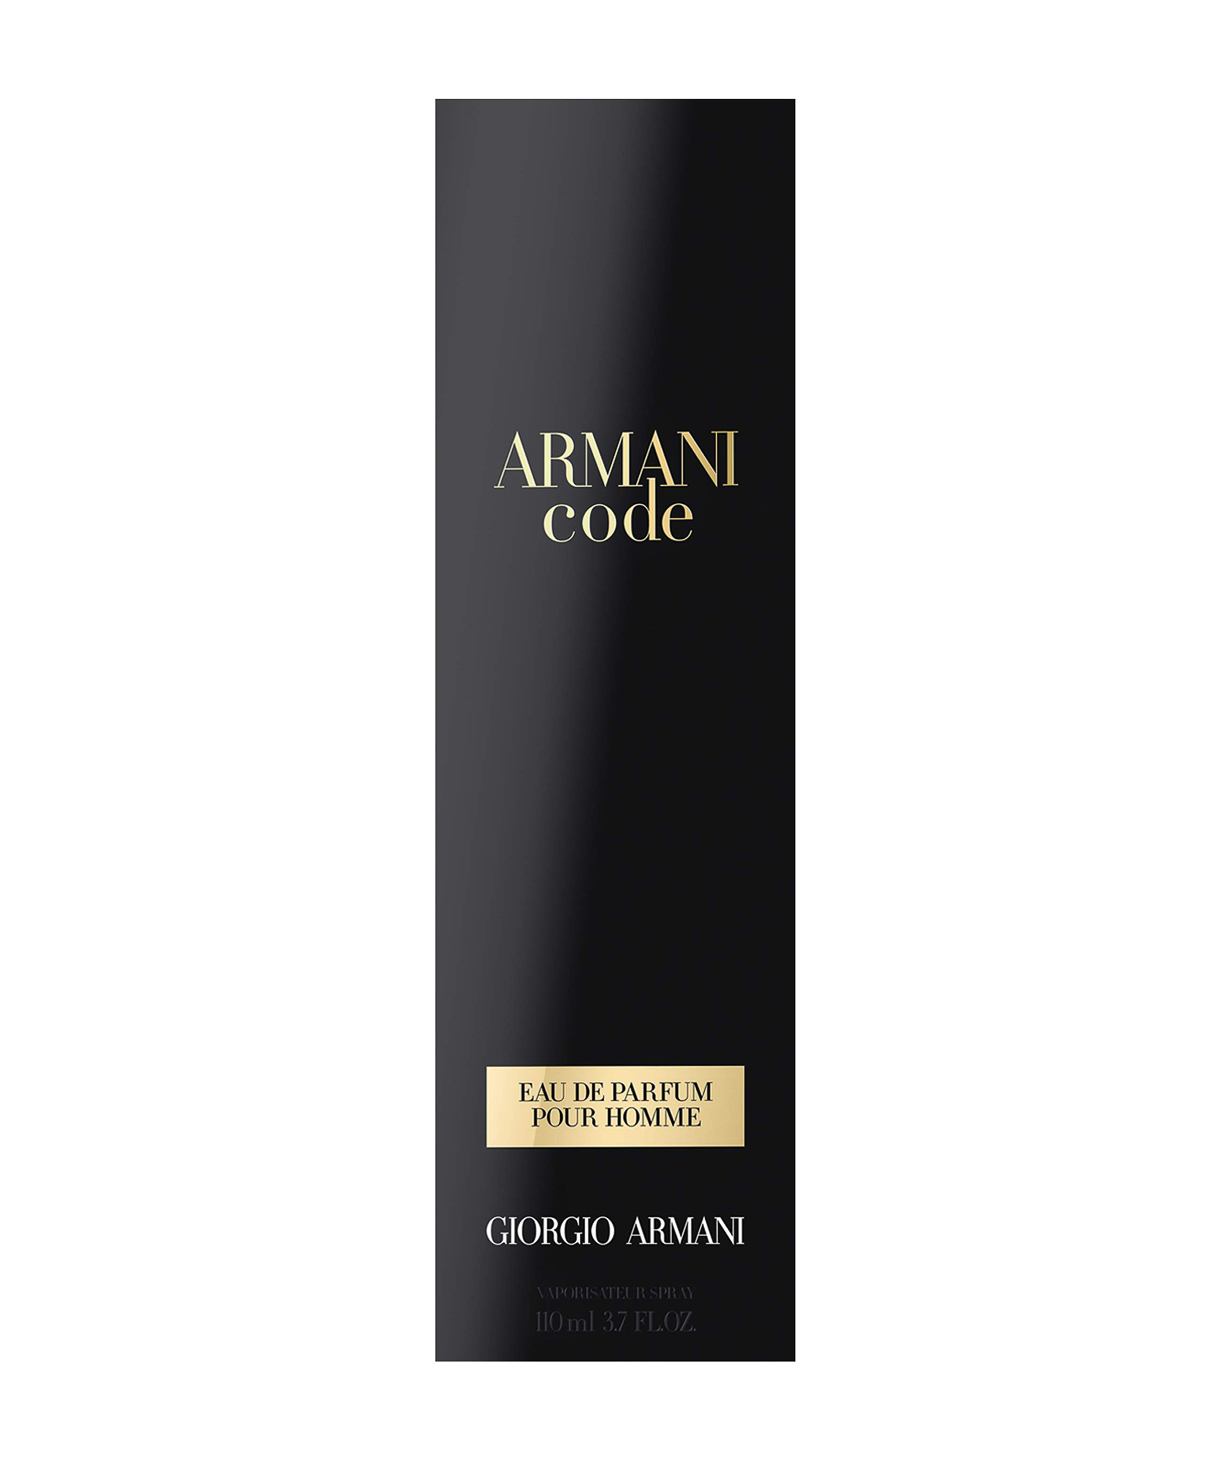 Perfume `Armani` Code, 60 ml